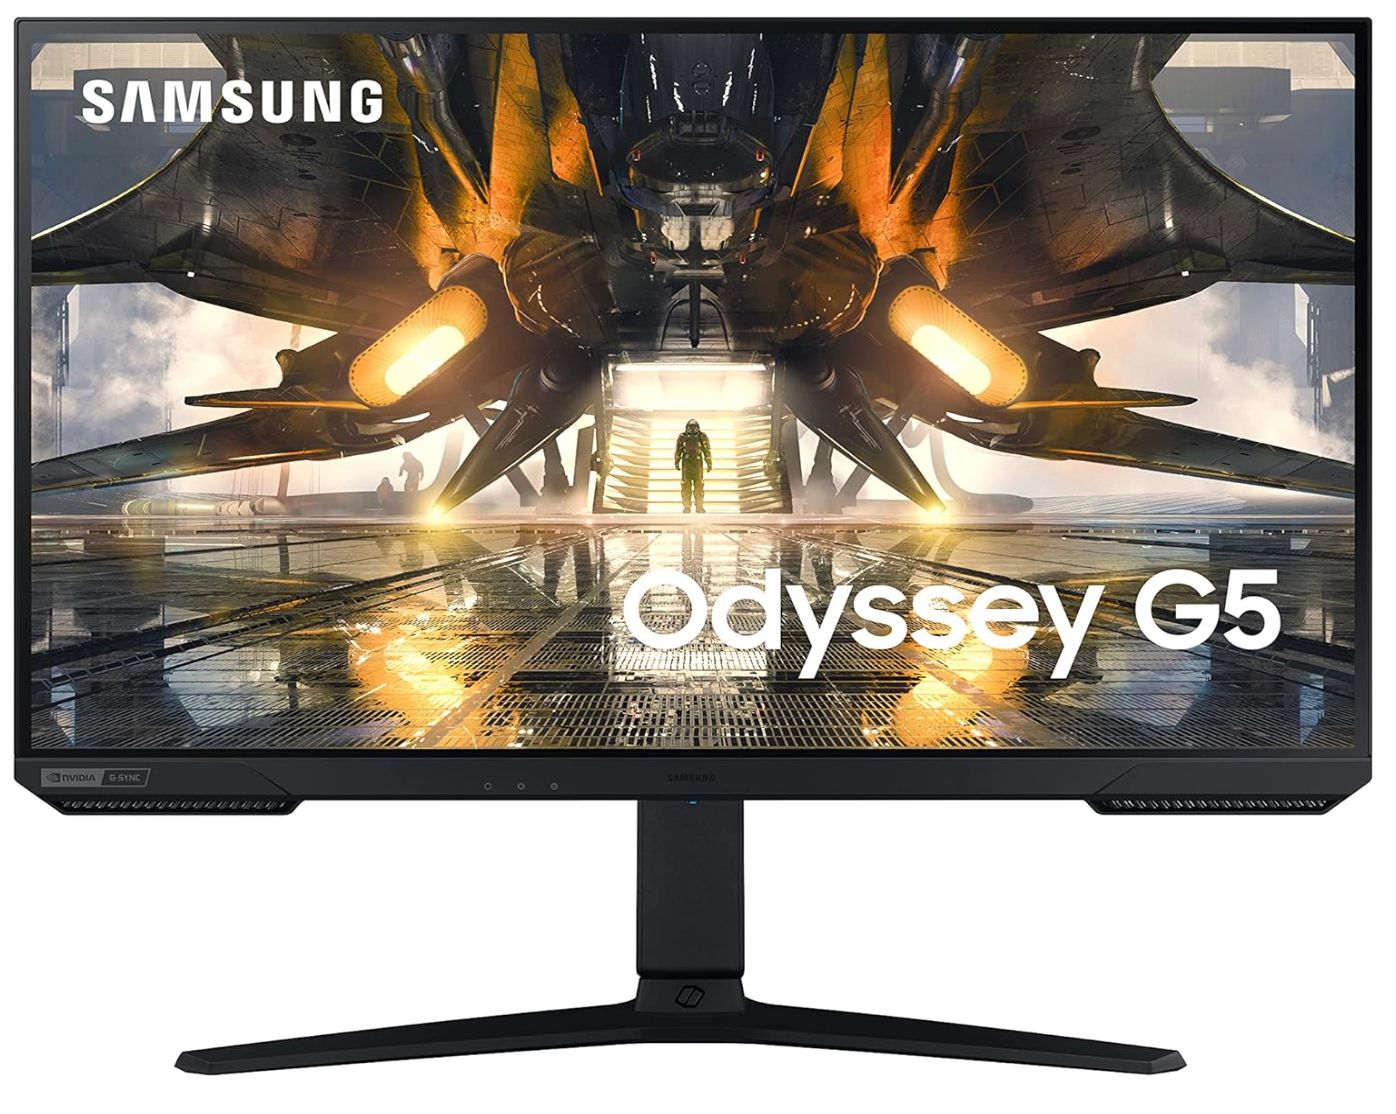 Samsung Odyssey G5 monitor